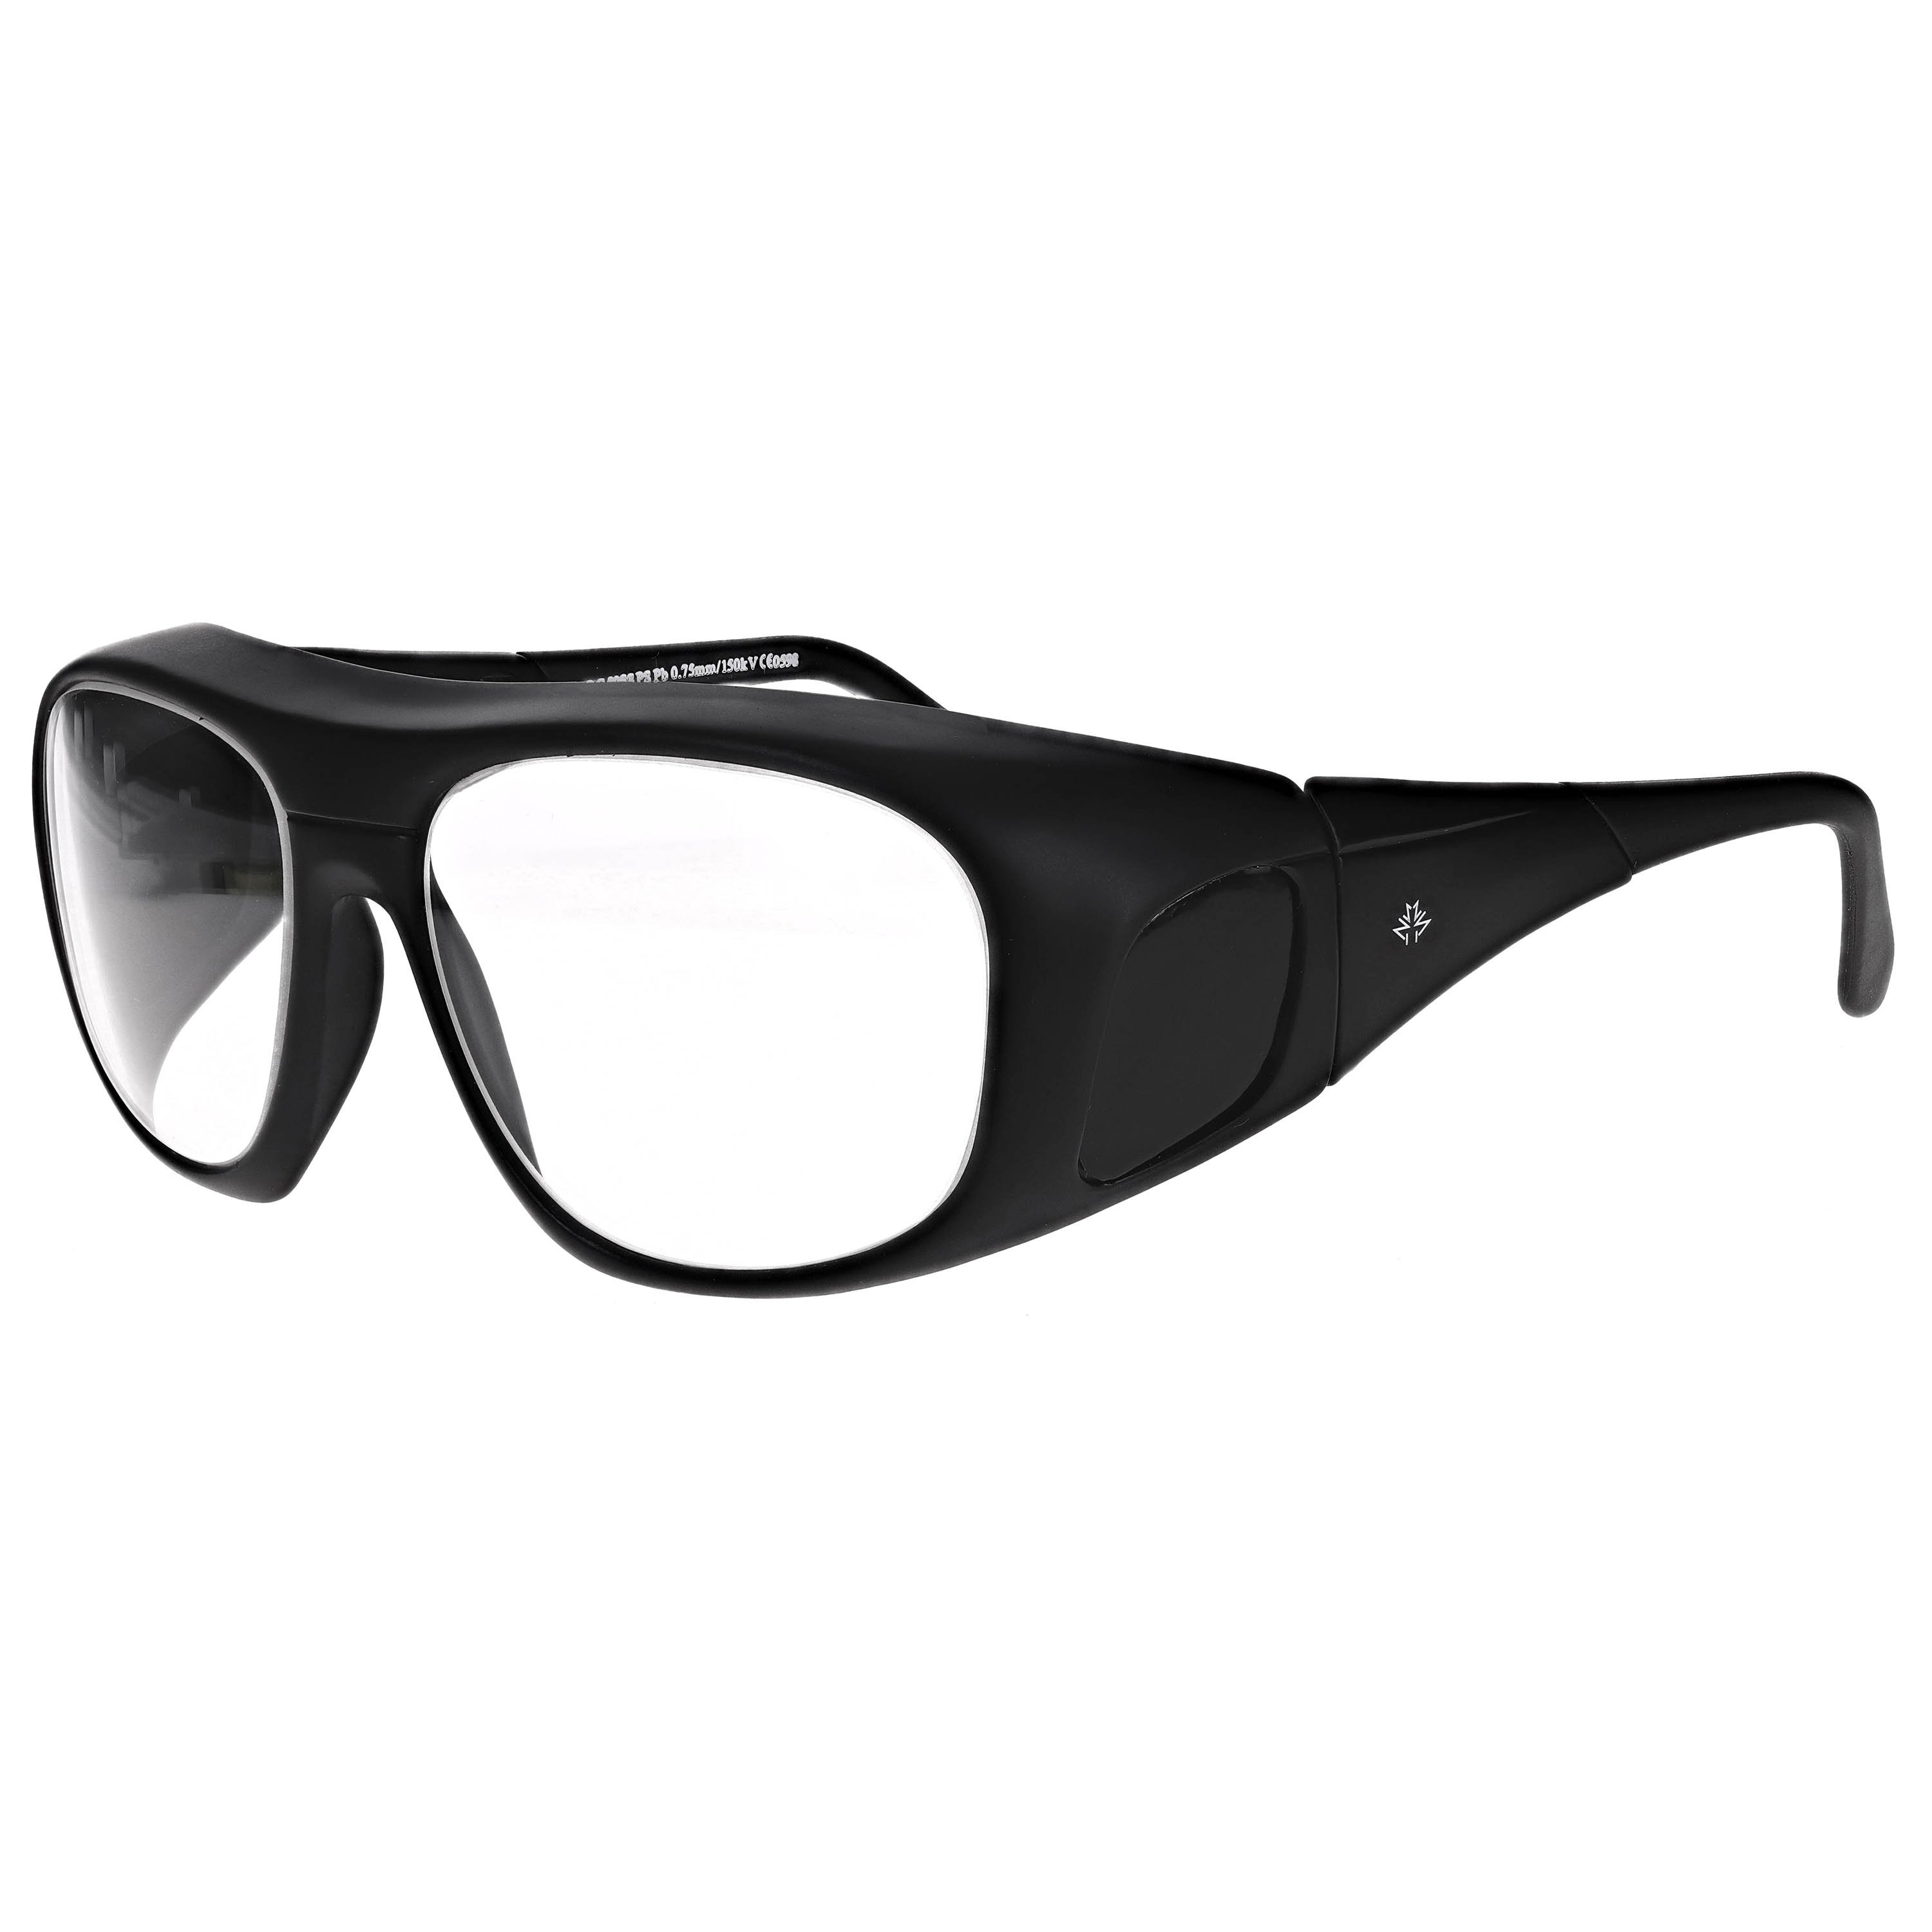 https://www.universalmedicalinc.com/media/catalog/product/cache/f176254afc5001a35a1c727280299a84/r/g/rg-38-bk-50ss_fit-over-radiation-glasses-model-38-black.jpg